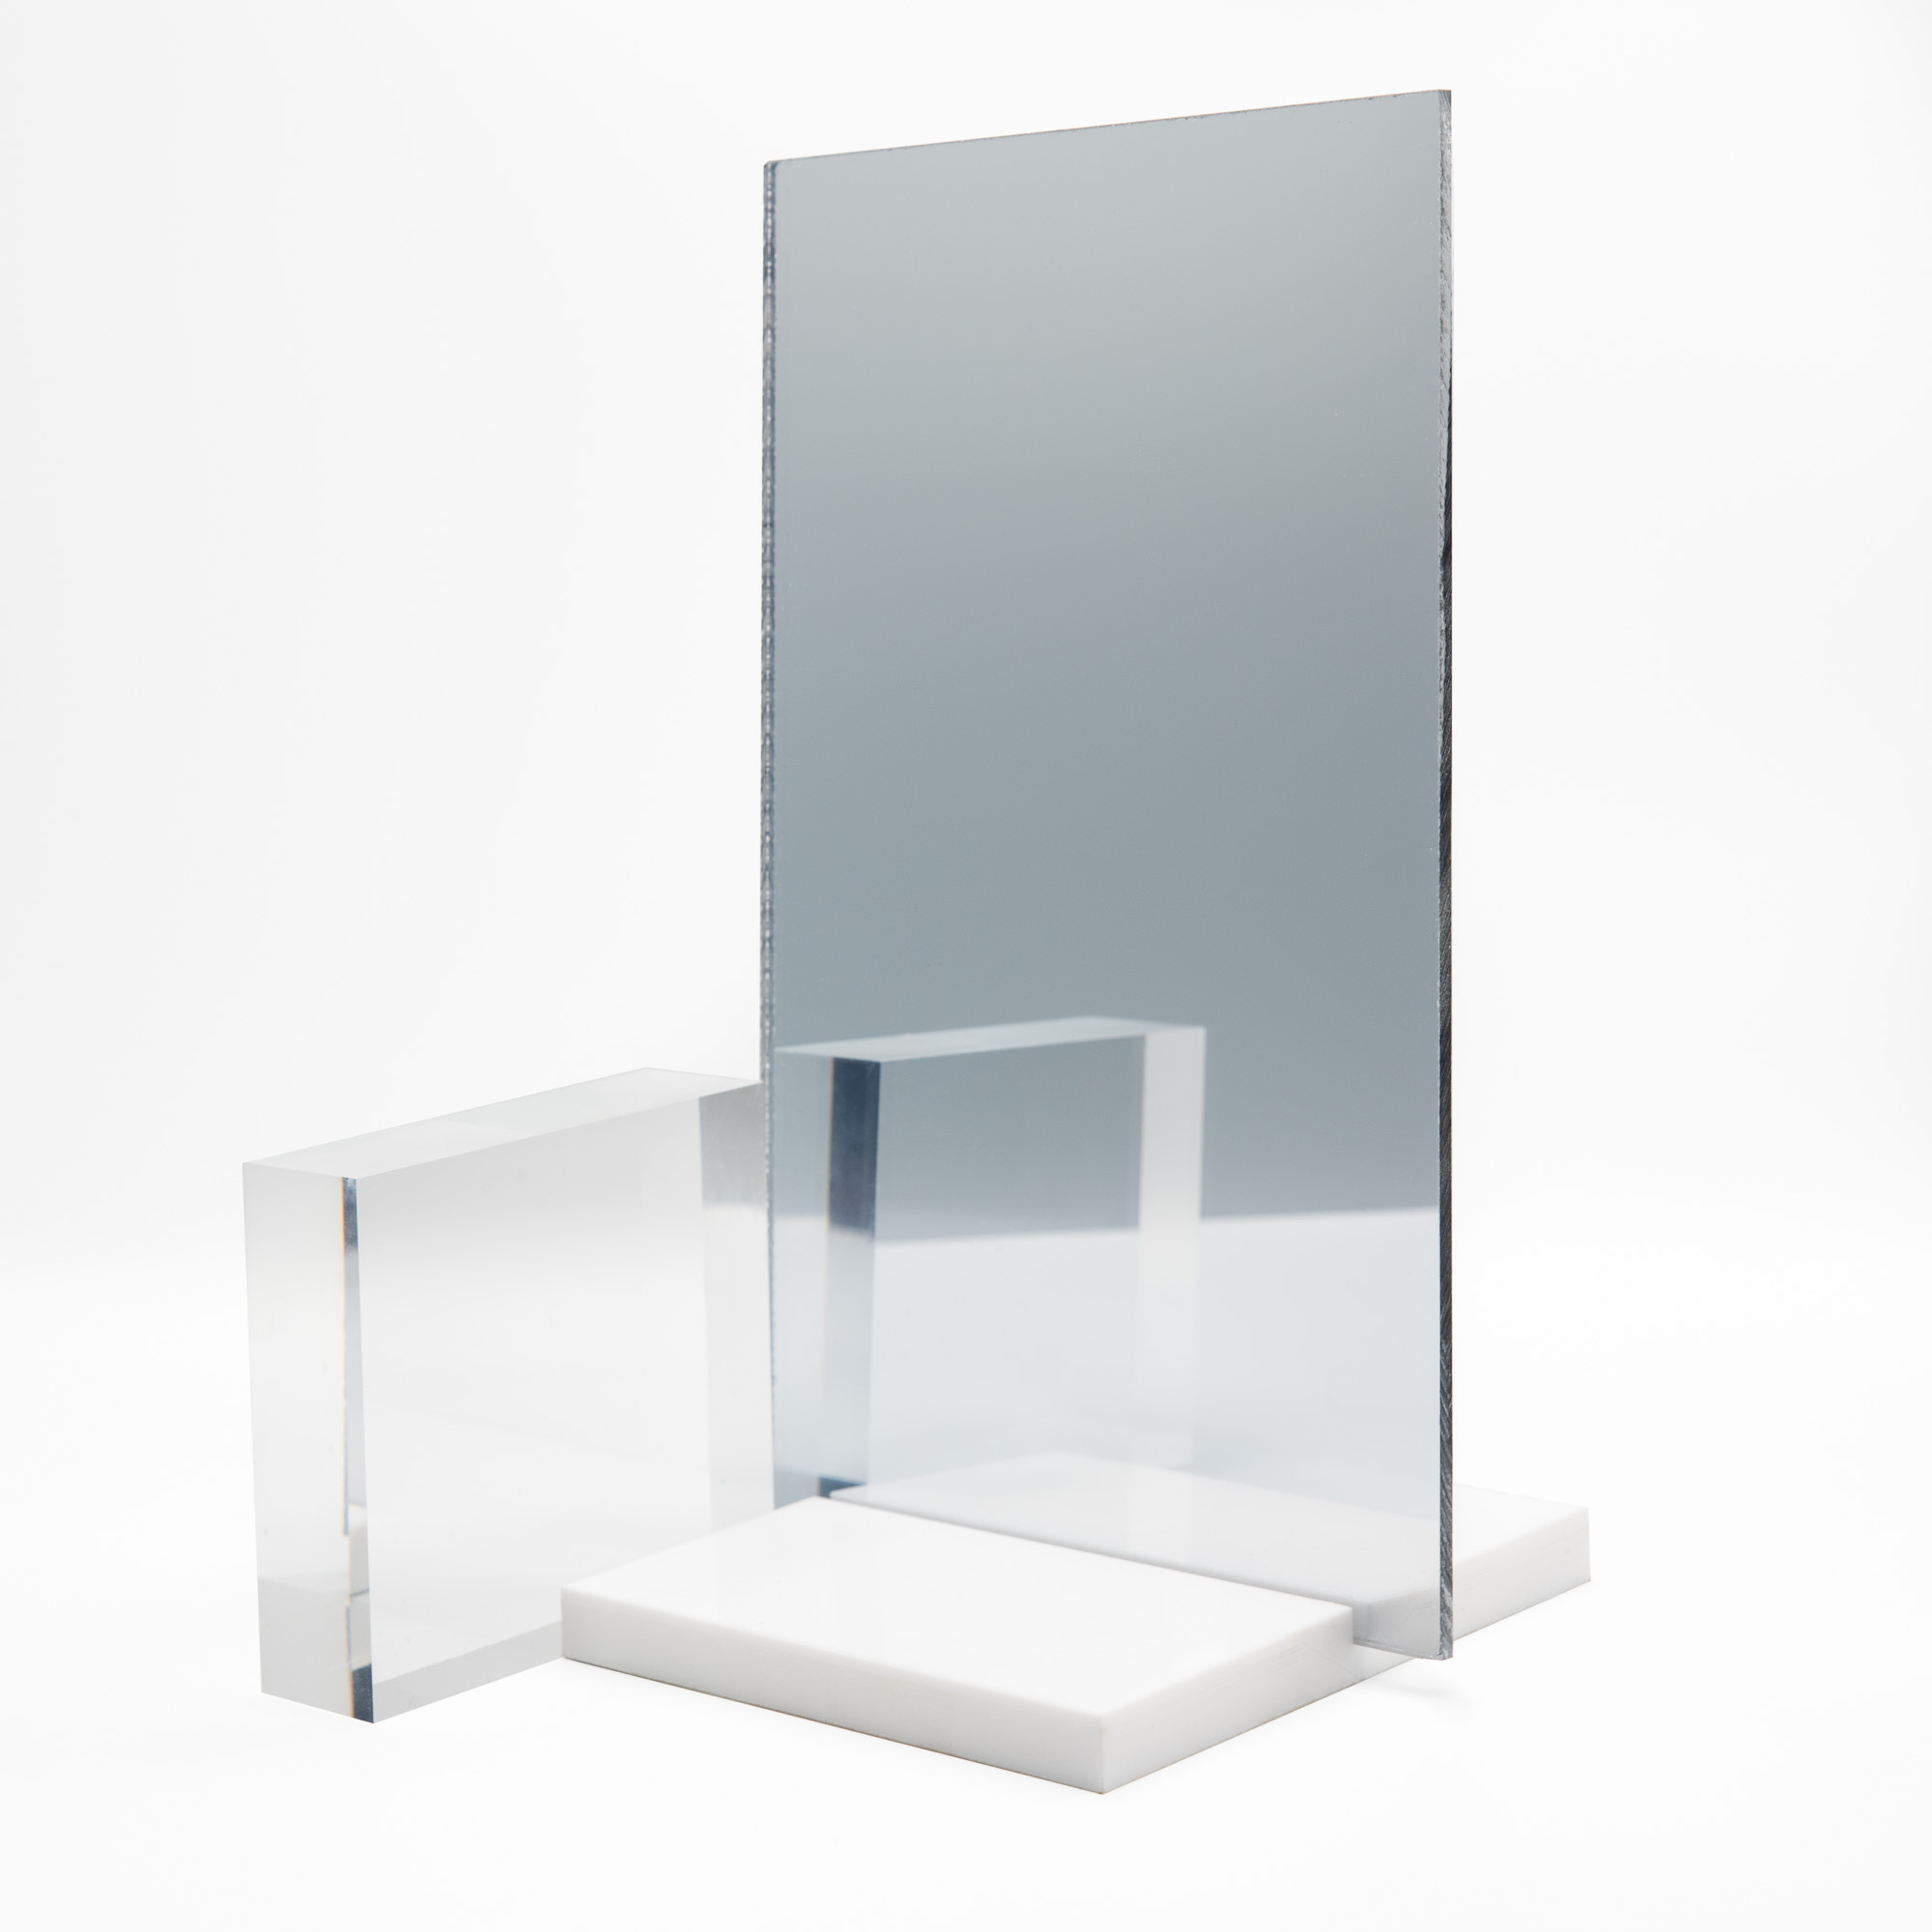 1/8 inch Two Way Mirror, 2 Way Acrylic Mirror Sheet, 24 x 24 Inches See Through Mirror, Plexiglass Sheet, Smart Mirror, Magic Glass, Unbreakable TV